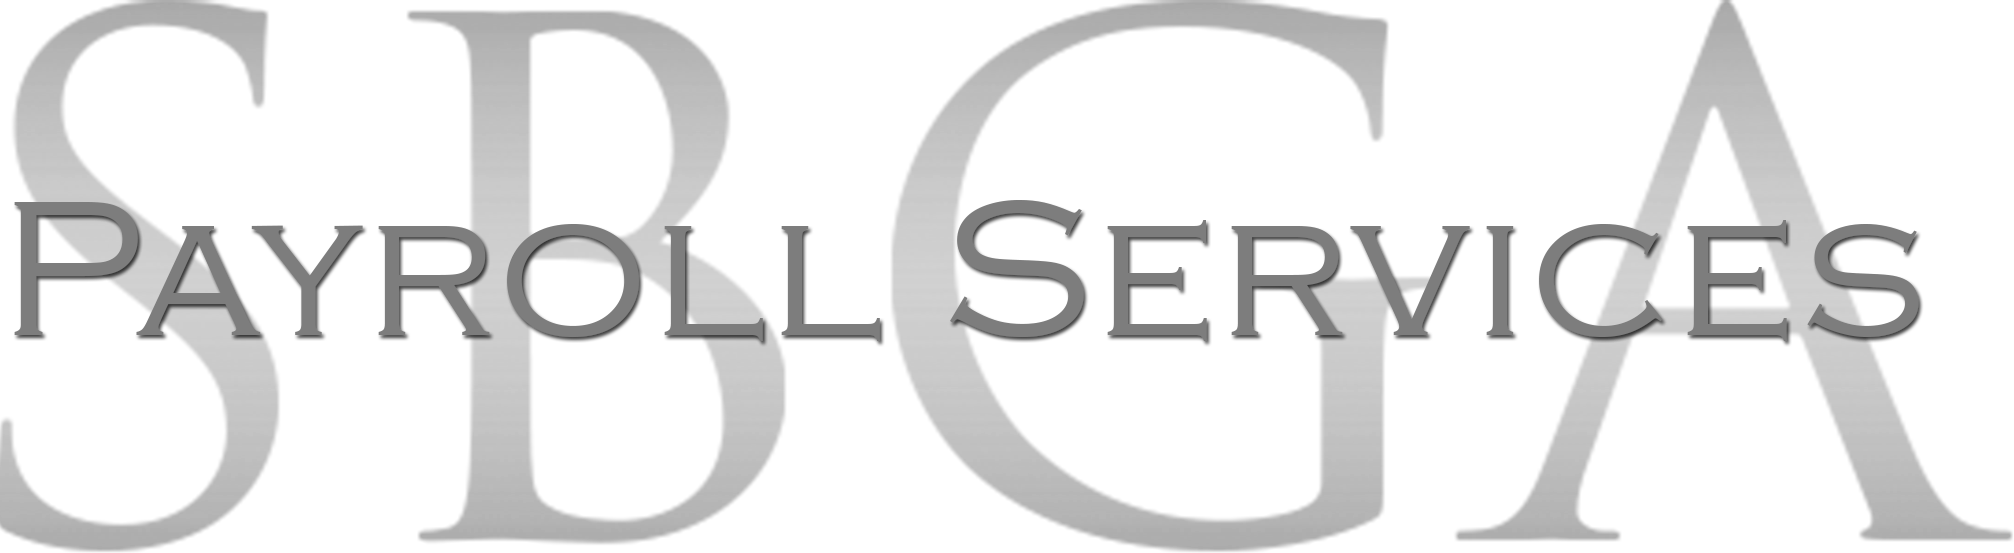 Payroll Services Logo